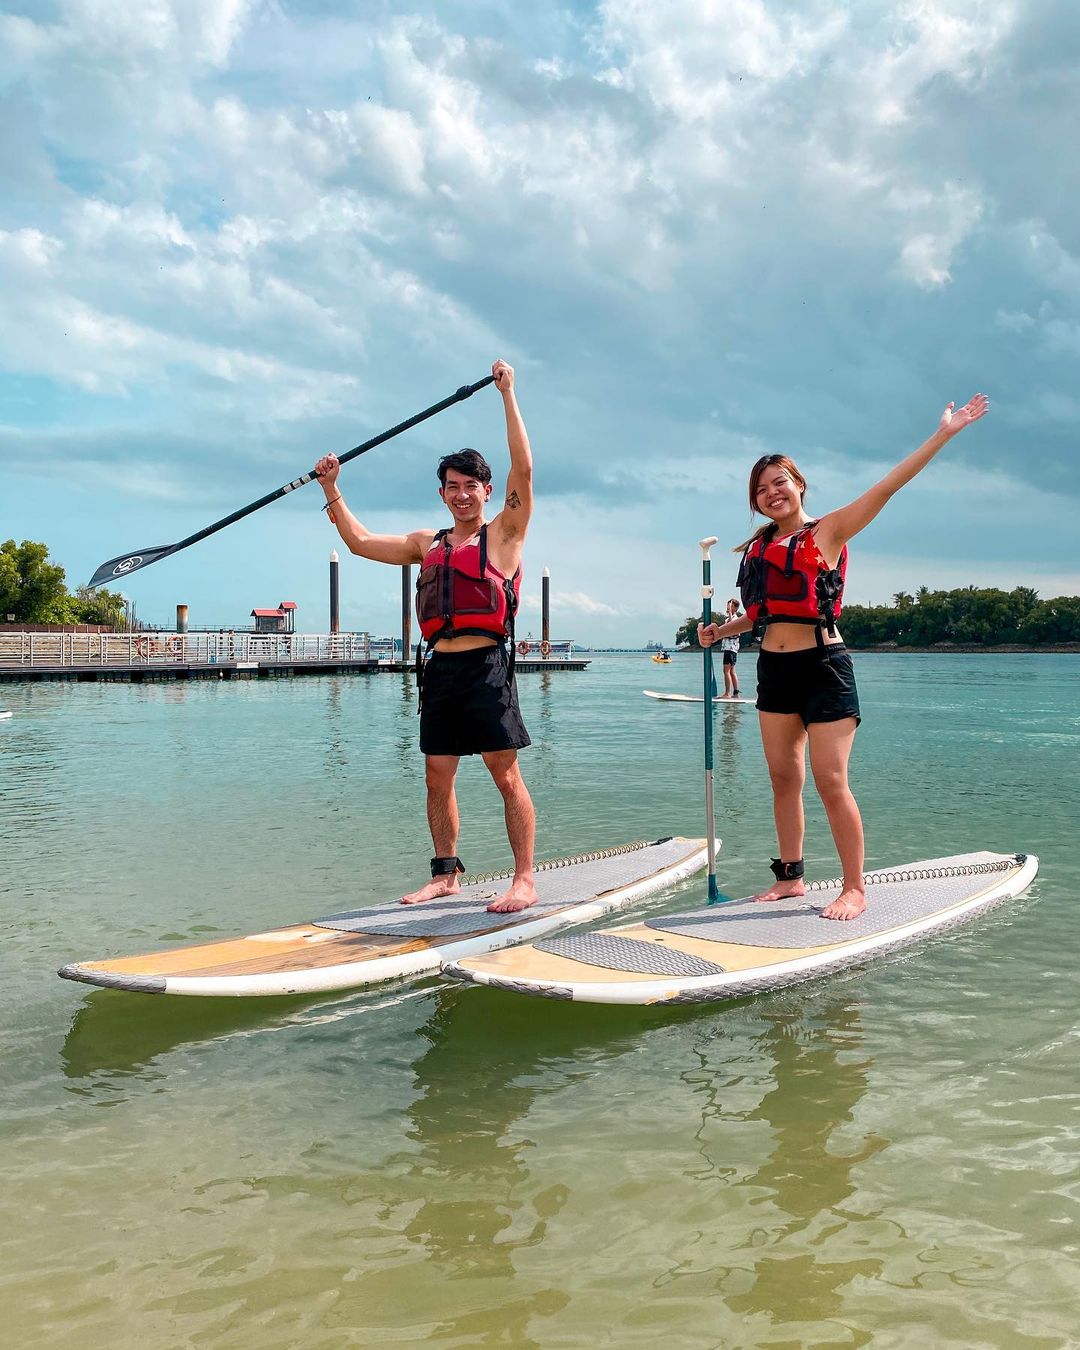 Ola Beach Club - stand-up paddling